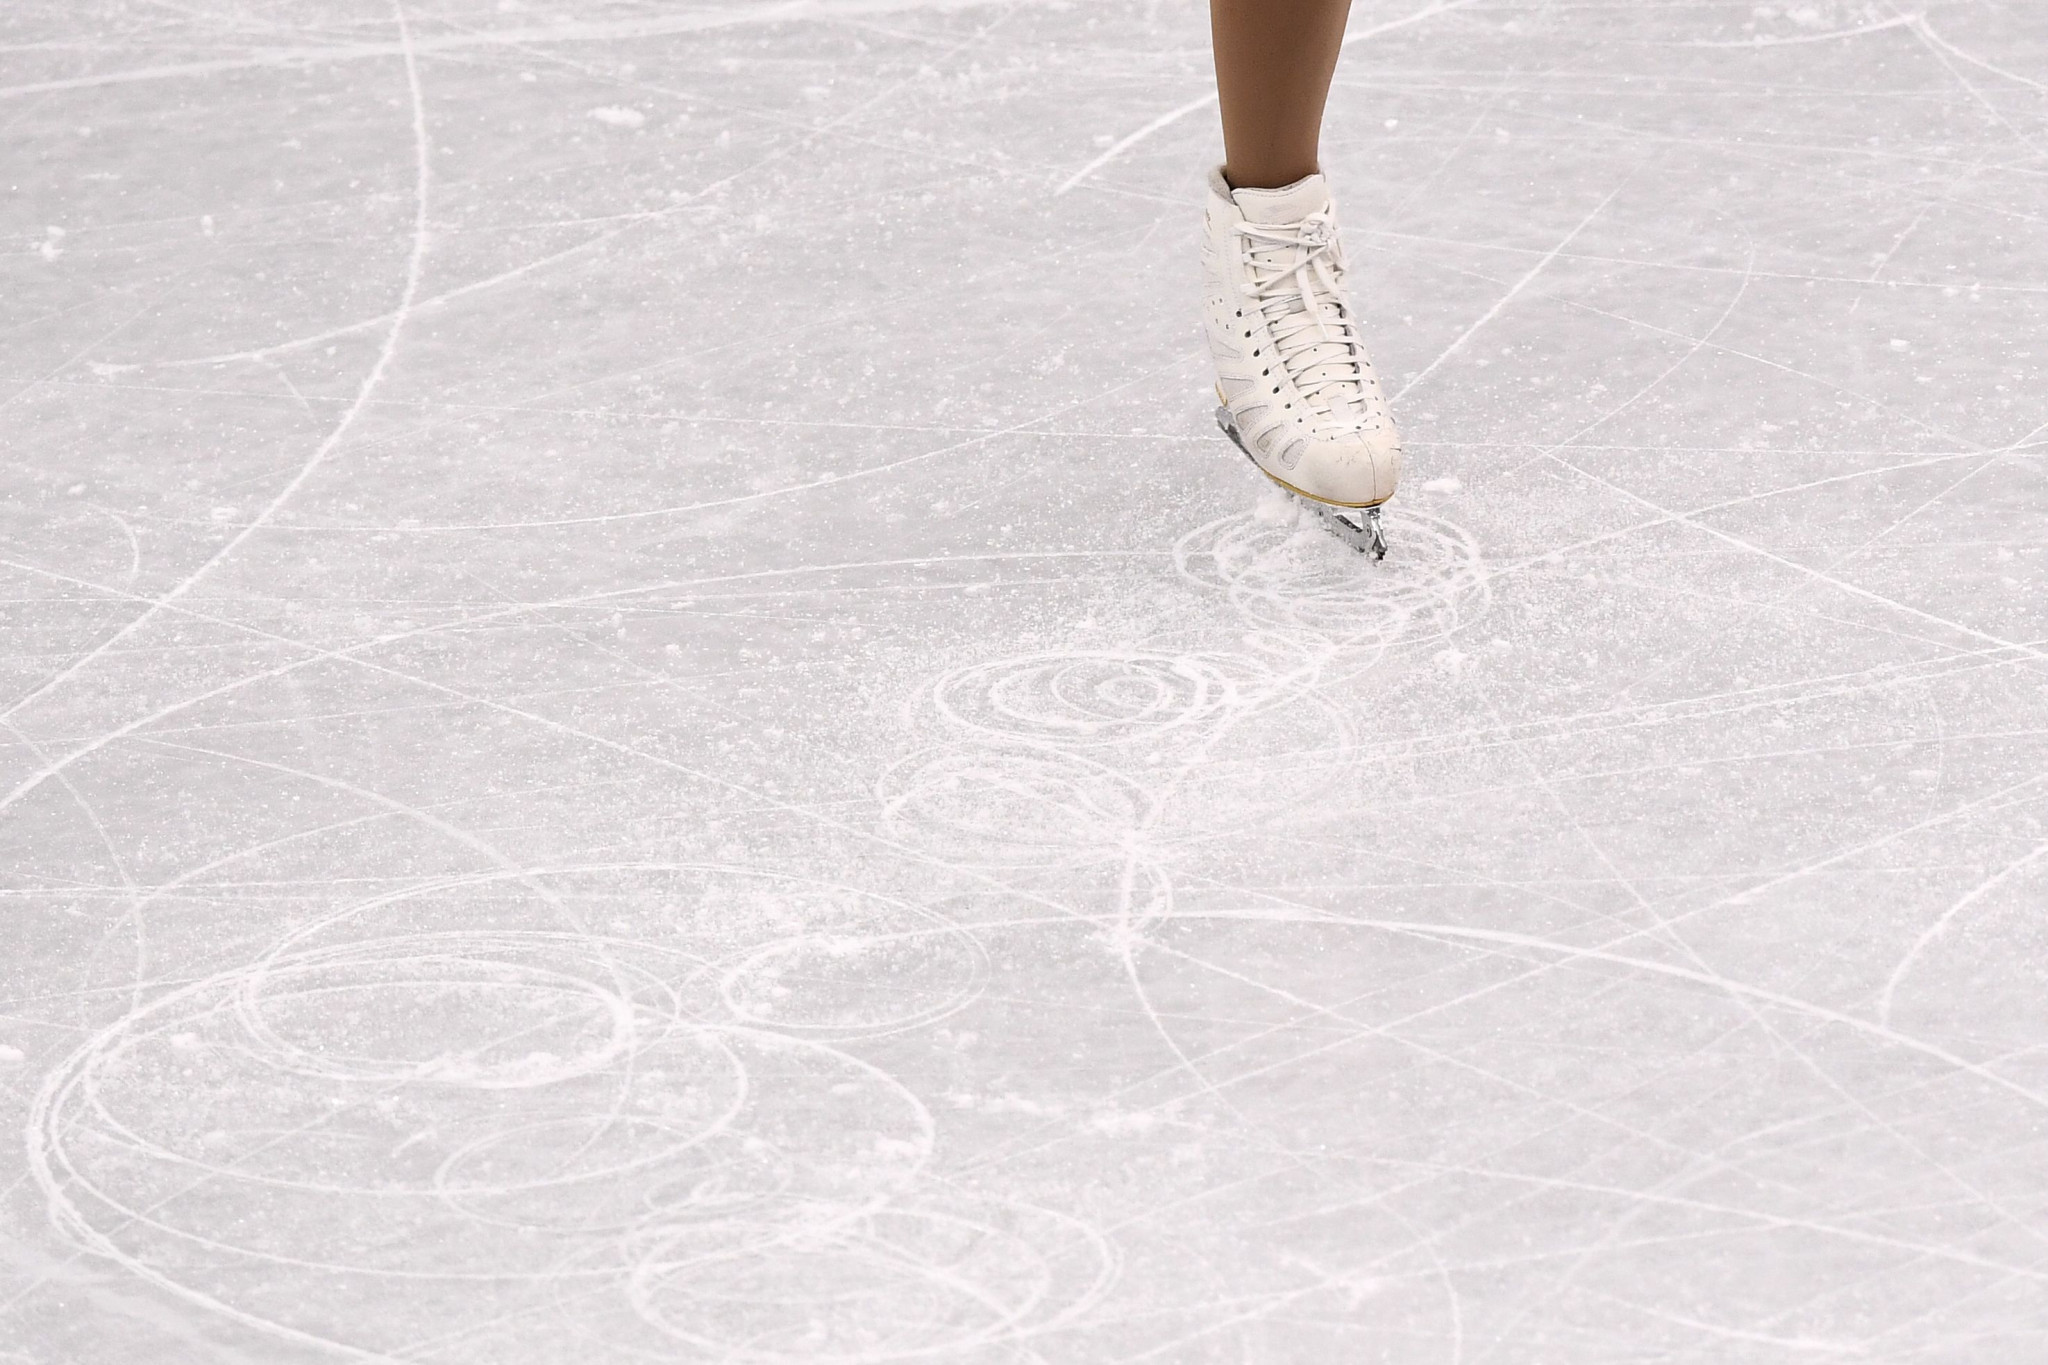 Skate Canada update National Safe Sport Program after accusations of ignoring complaints